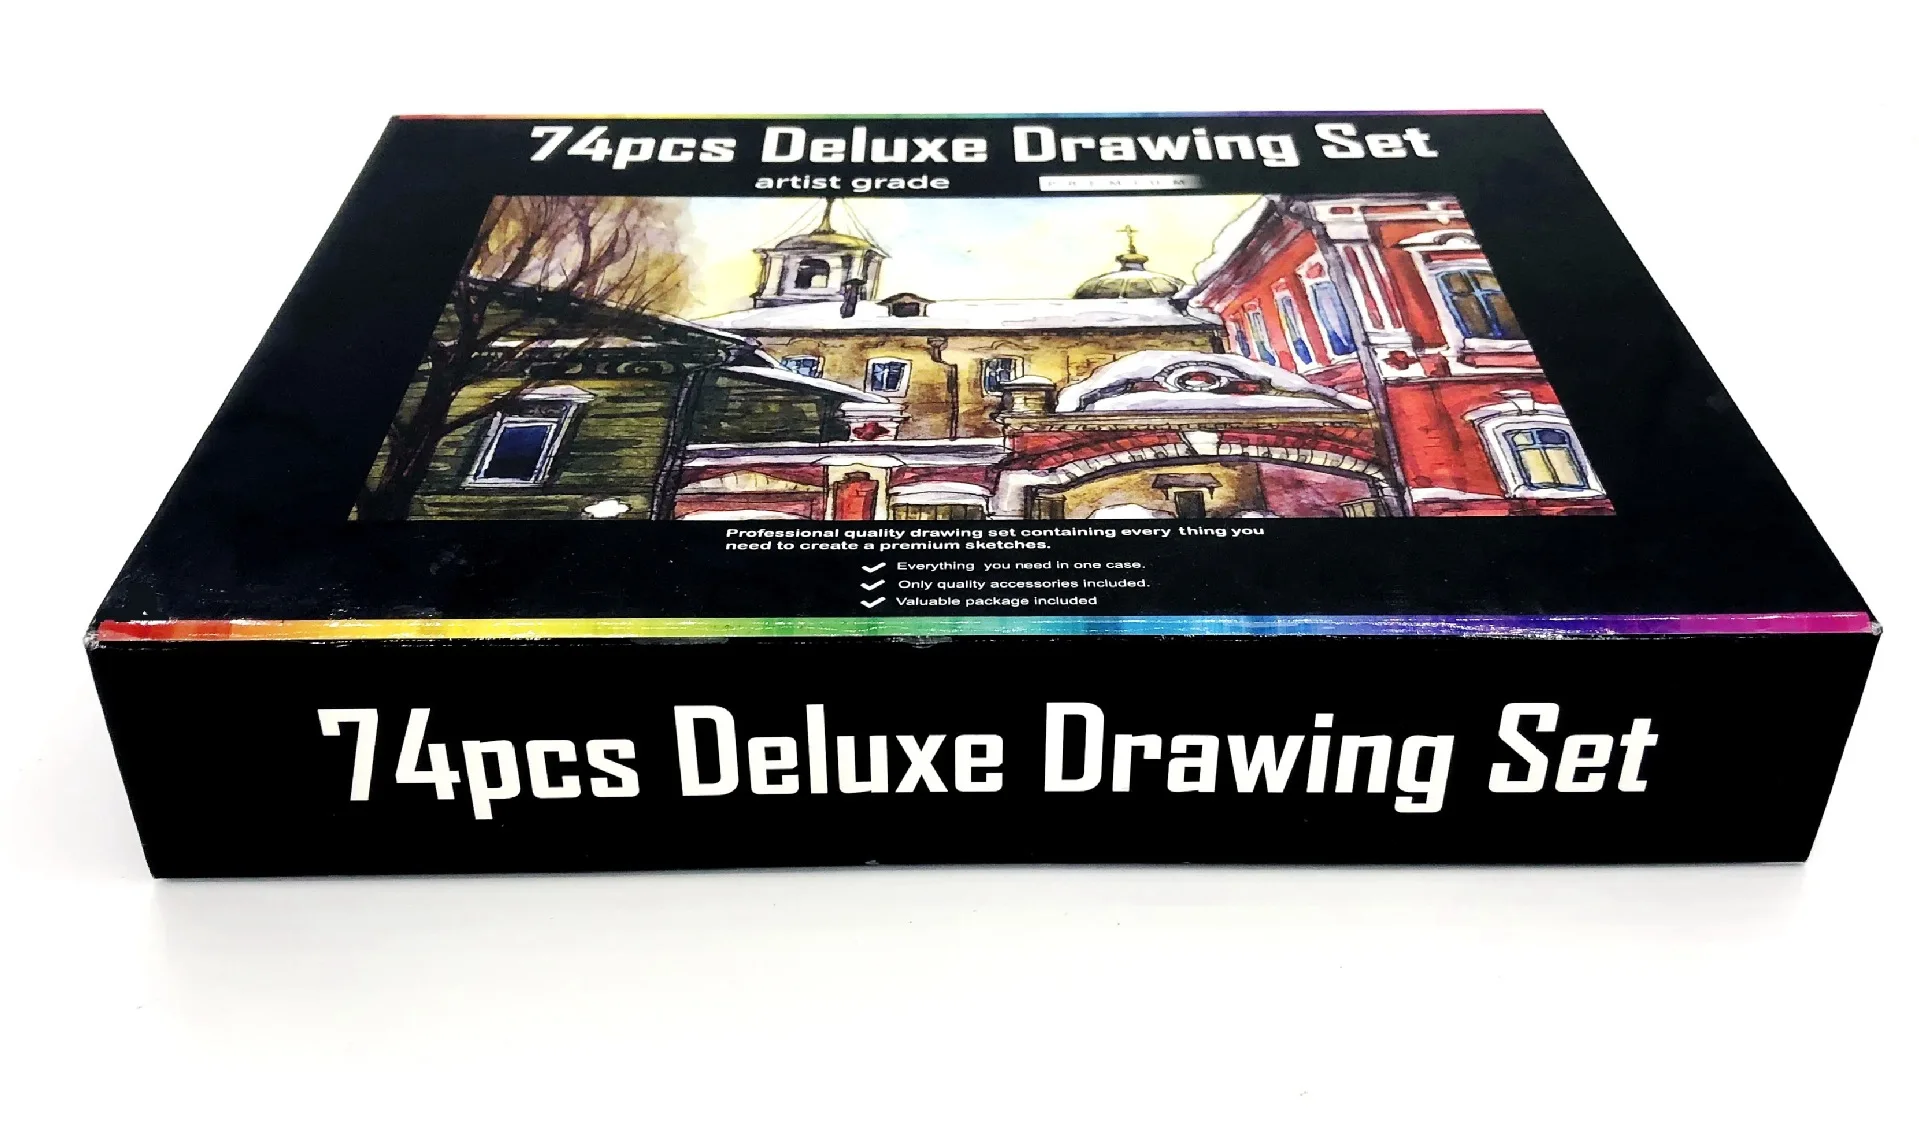 74 Drawing Sketching Kit Set,Pro Art Supplies with Sketchbook